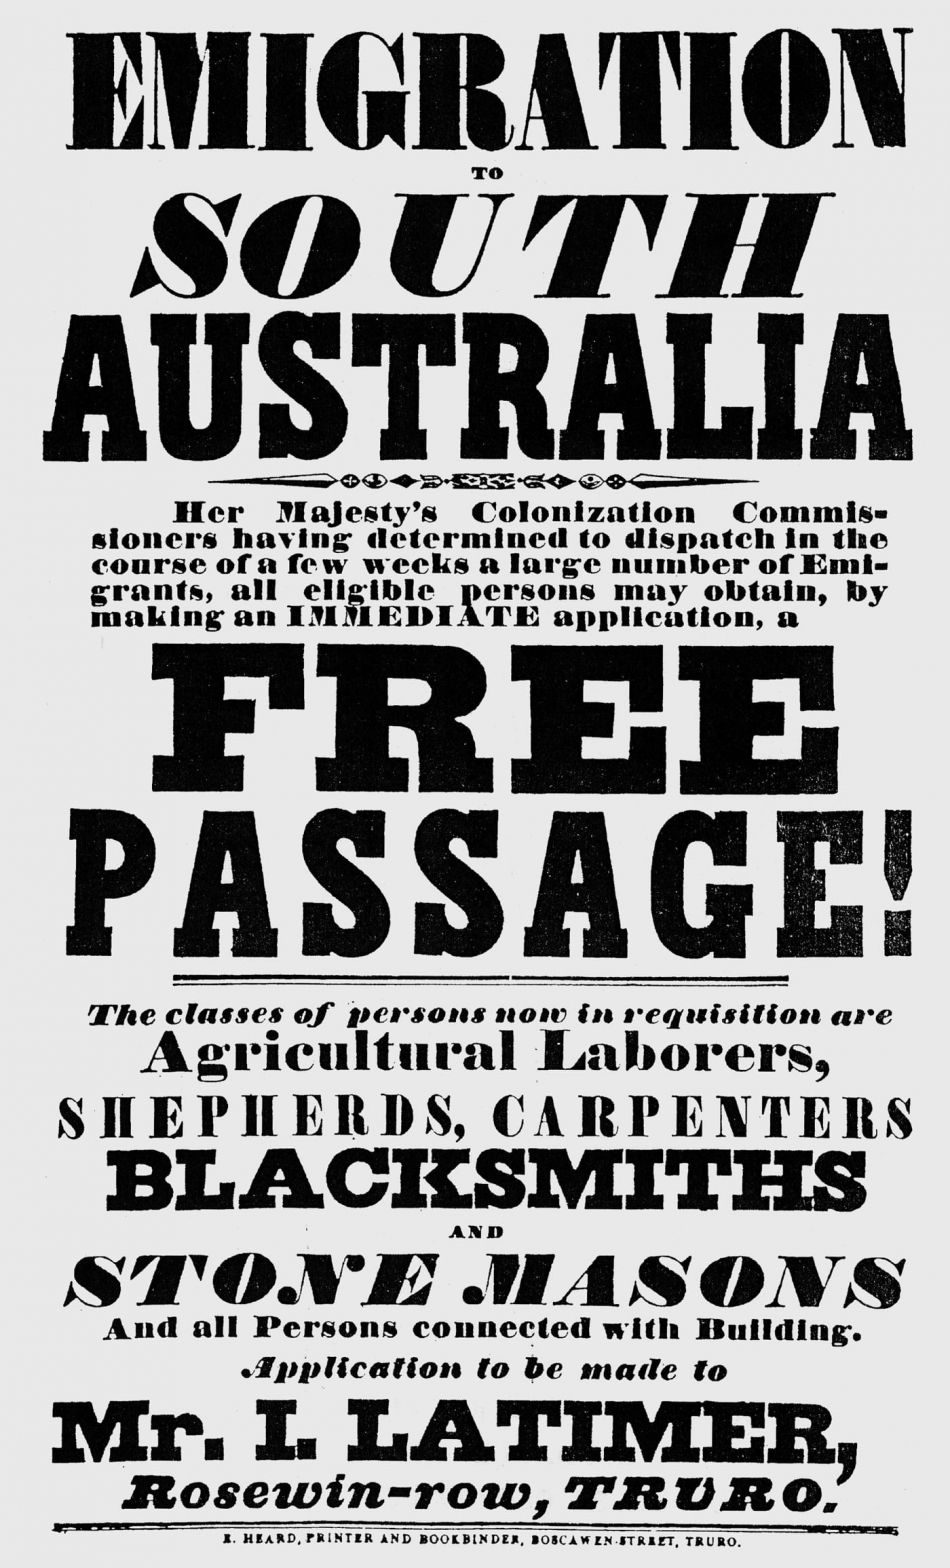 Poster to promote emigration to South Australia